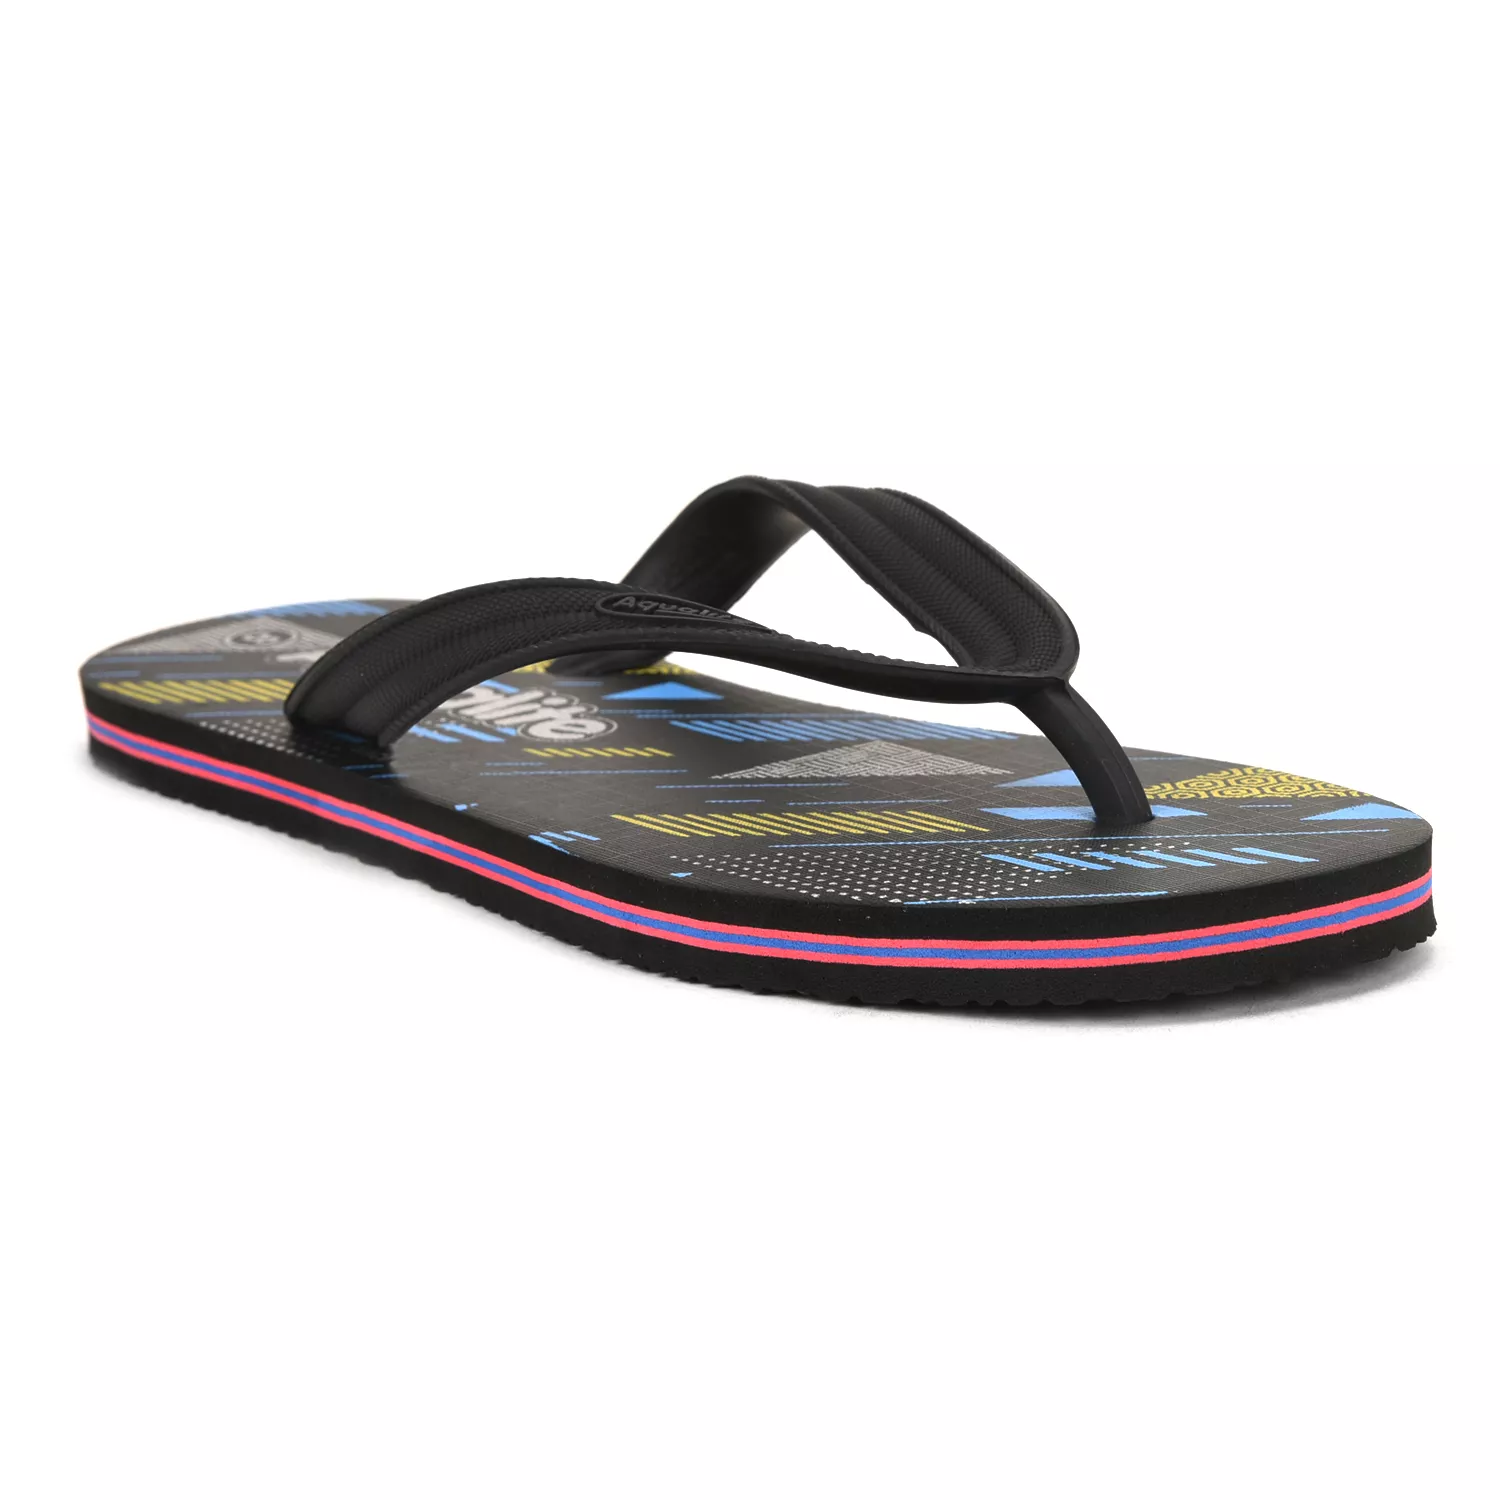 Aqualite Slippers For Men - Buy Aqualite Slippers For Men online in India